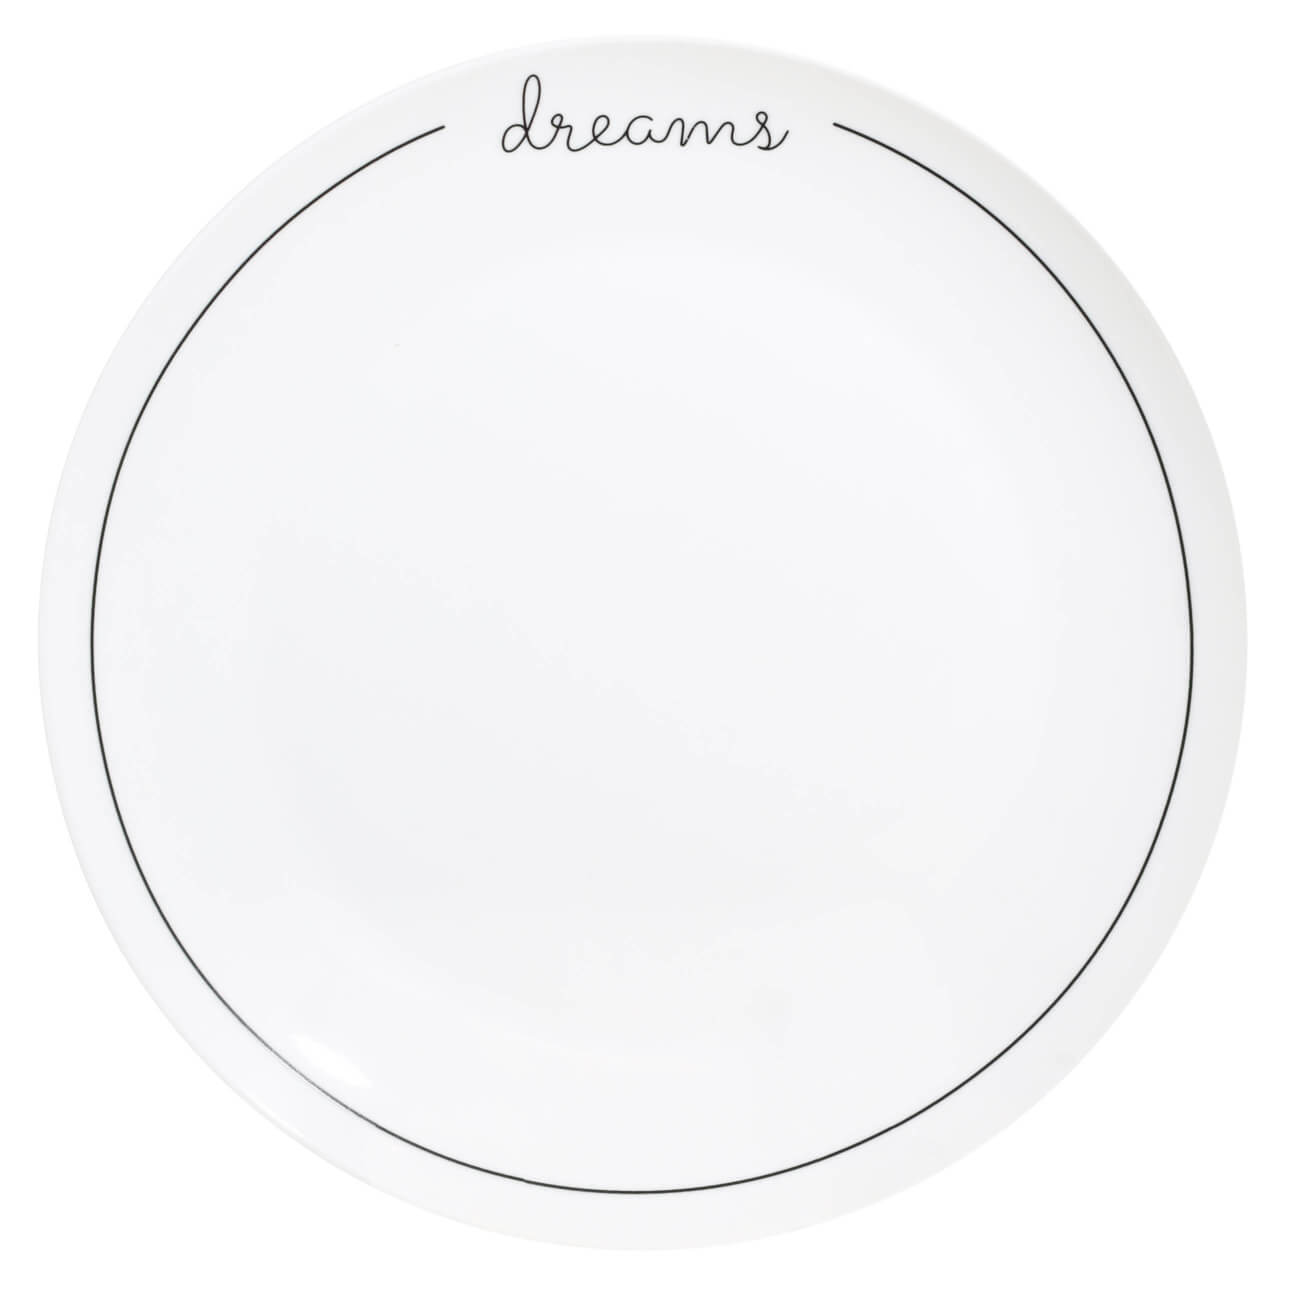 Тарелка обеденная, 27 см, фарфор N, белая, Dreams, Scroll white тарелка обеденная 27 см фарфор n белая dreams scroll white